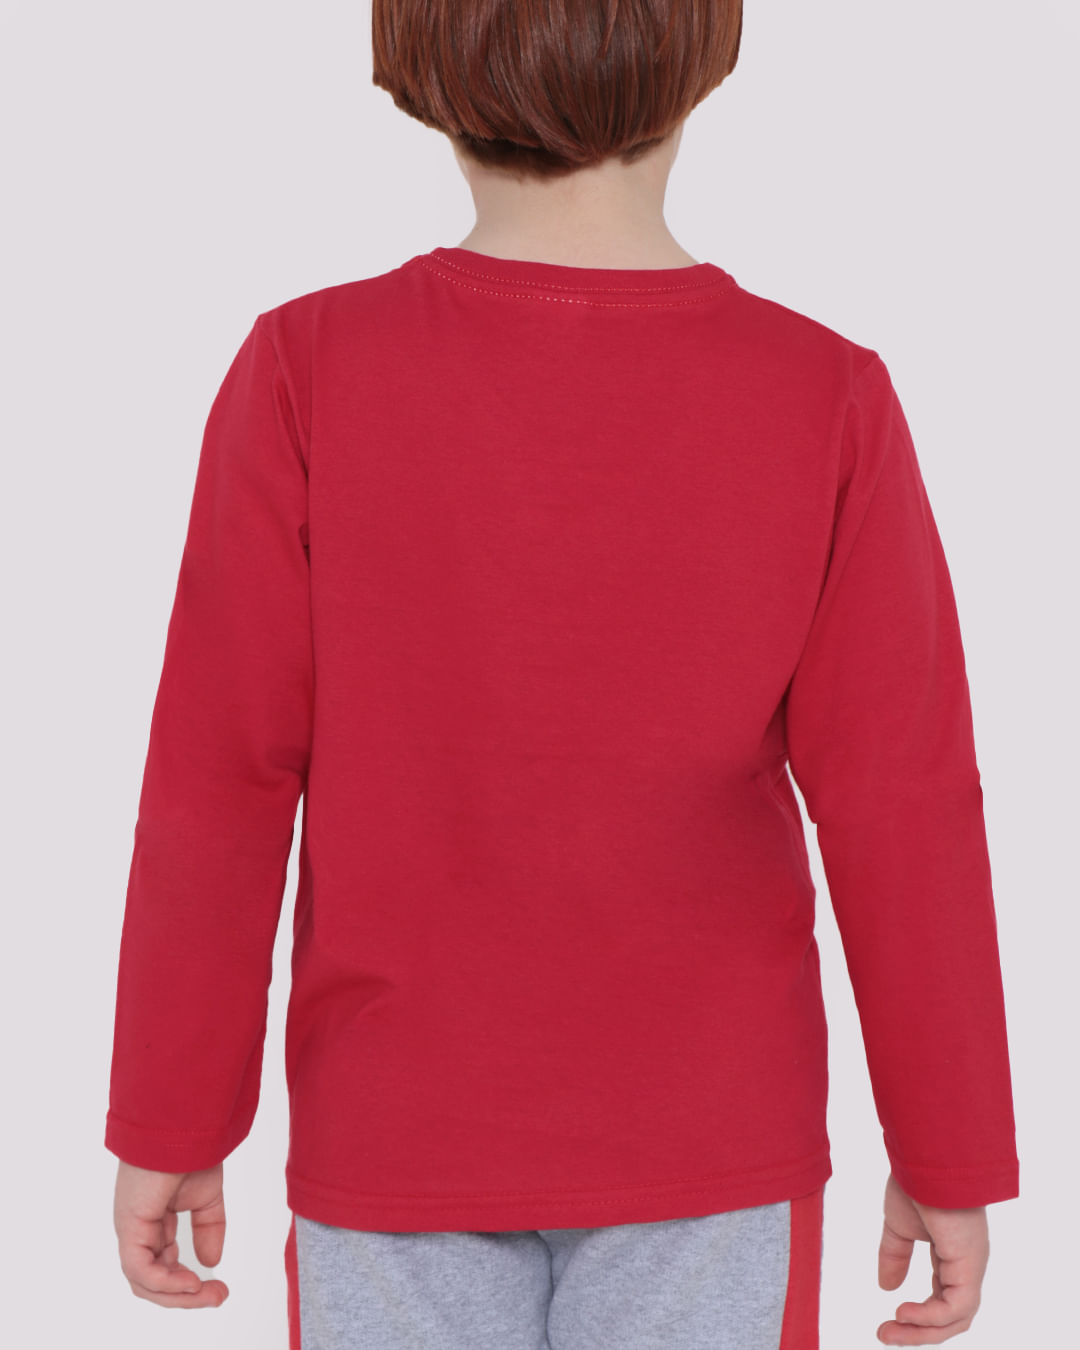 Camiseta-Infantil-The-Game-Vermelha